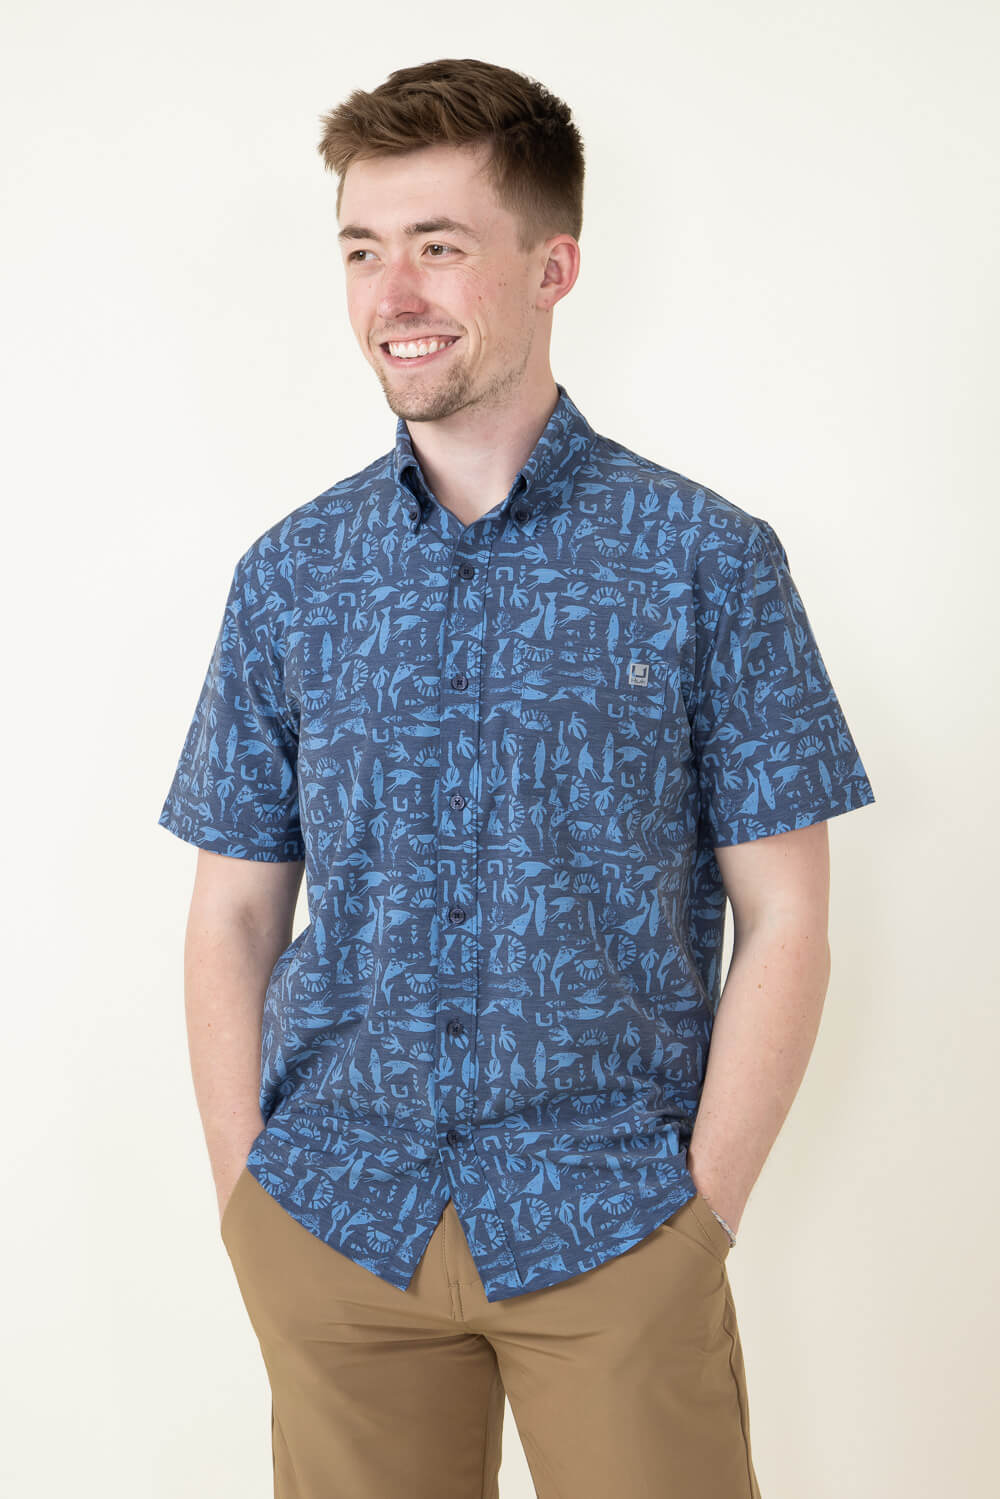 Huk Kona Batiki Short-Sleeve Button-Down Shirt for Men - Naval Academy - L